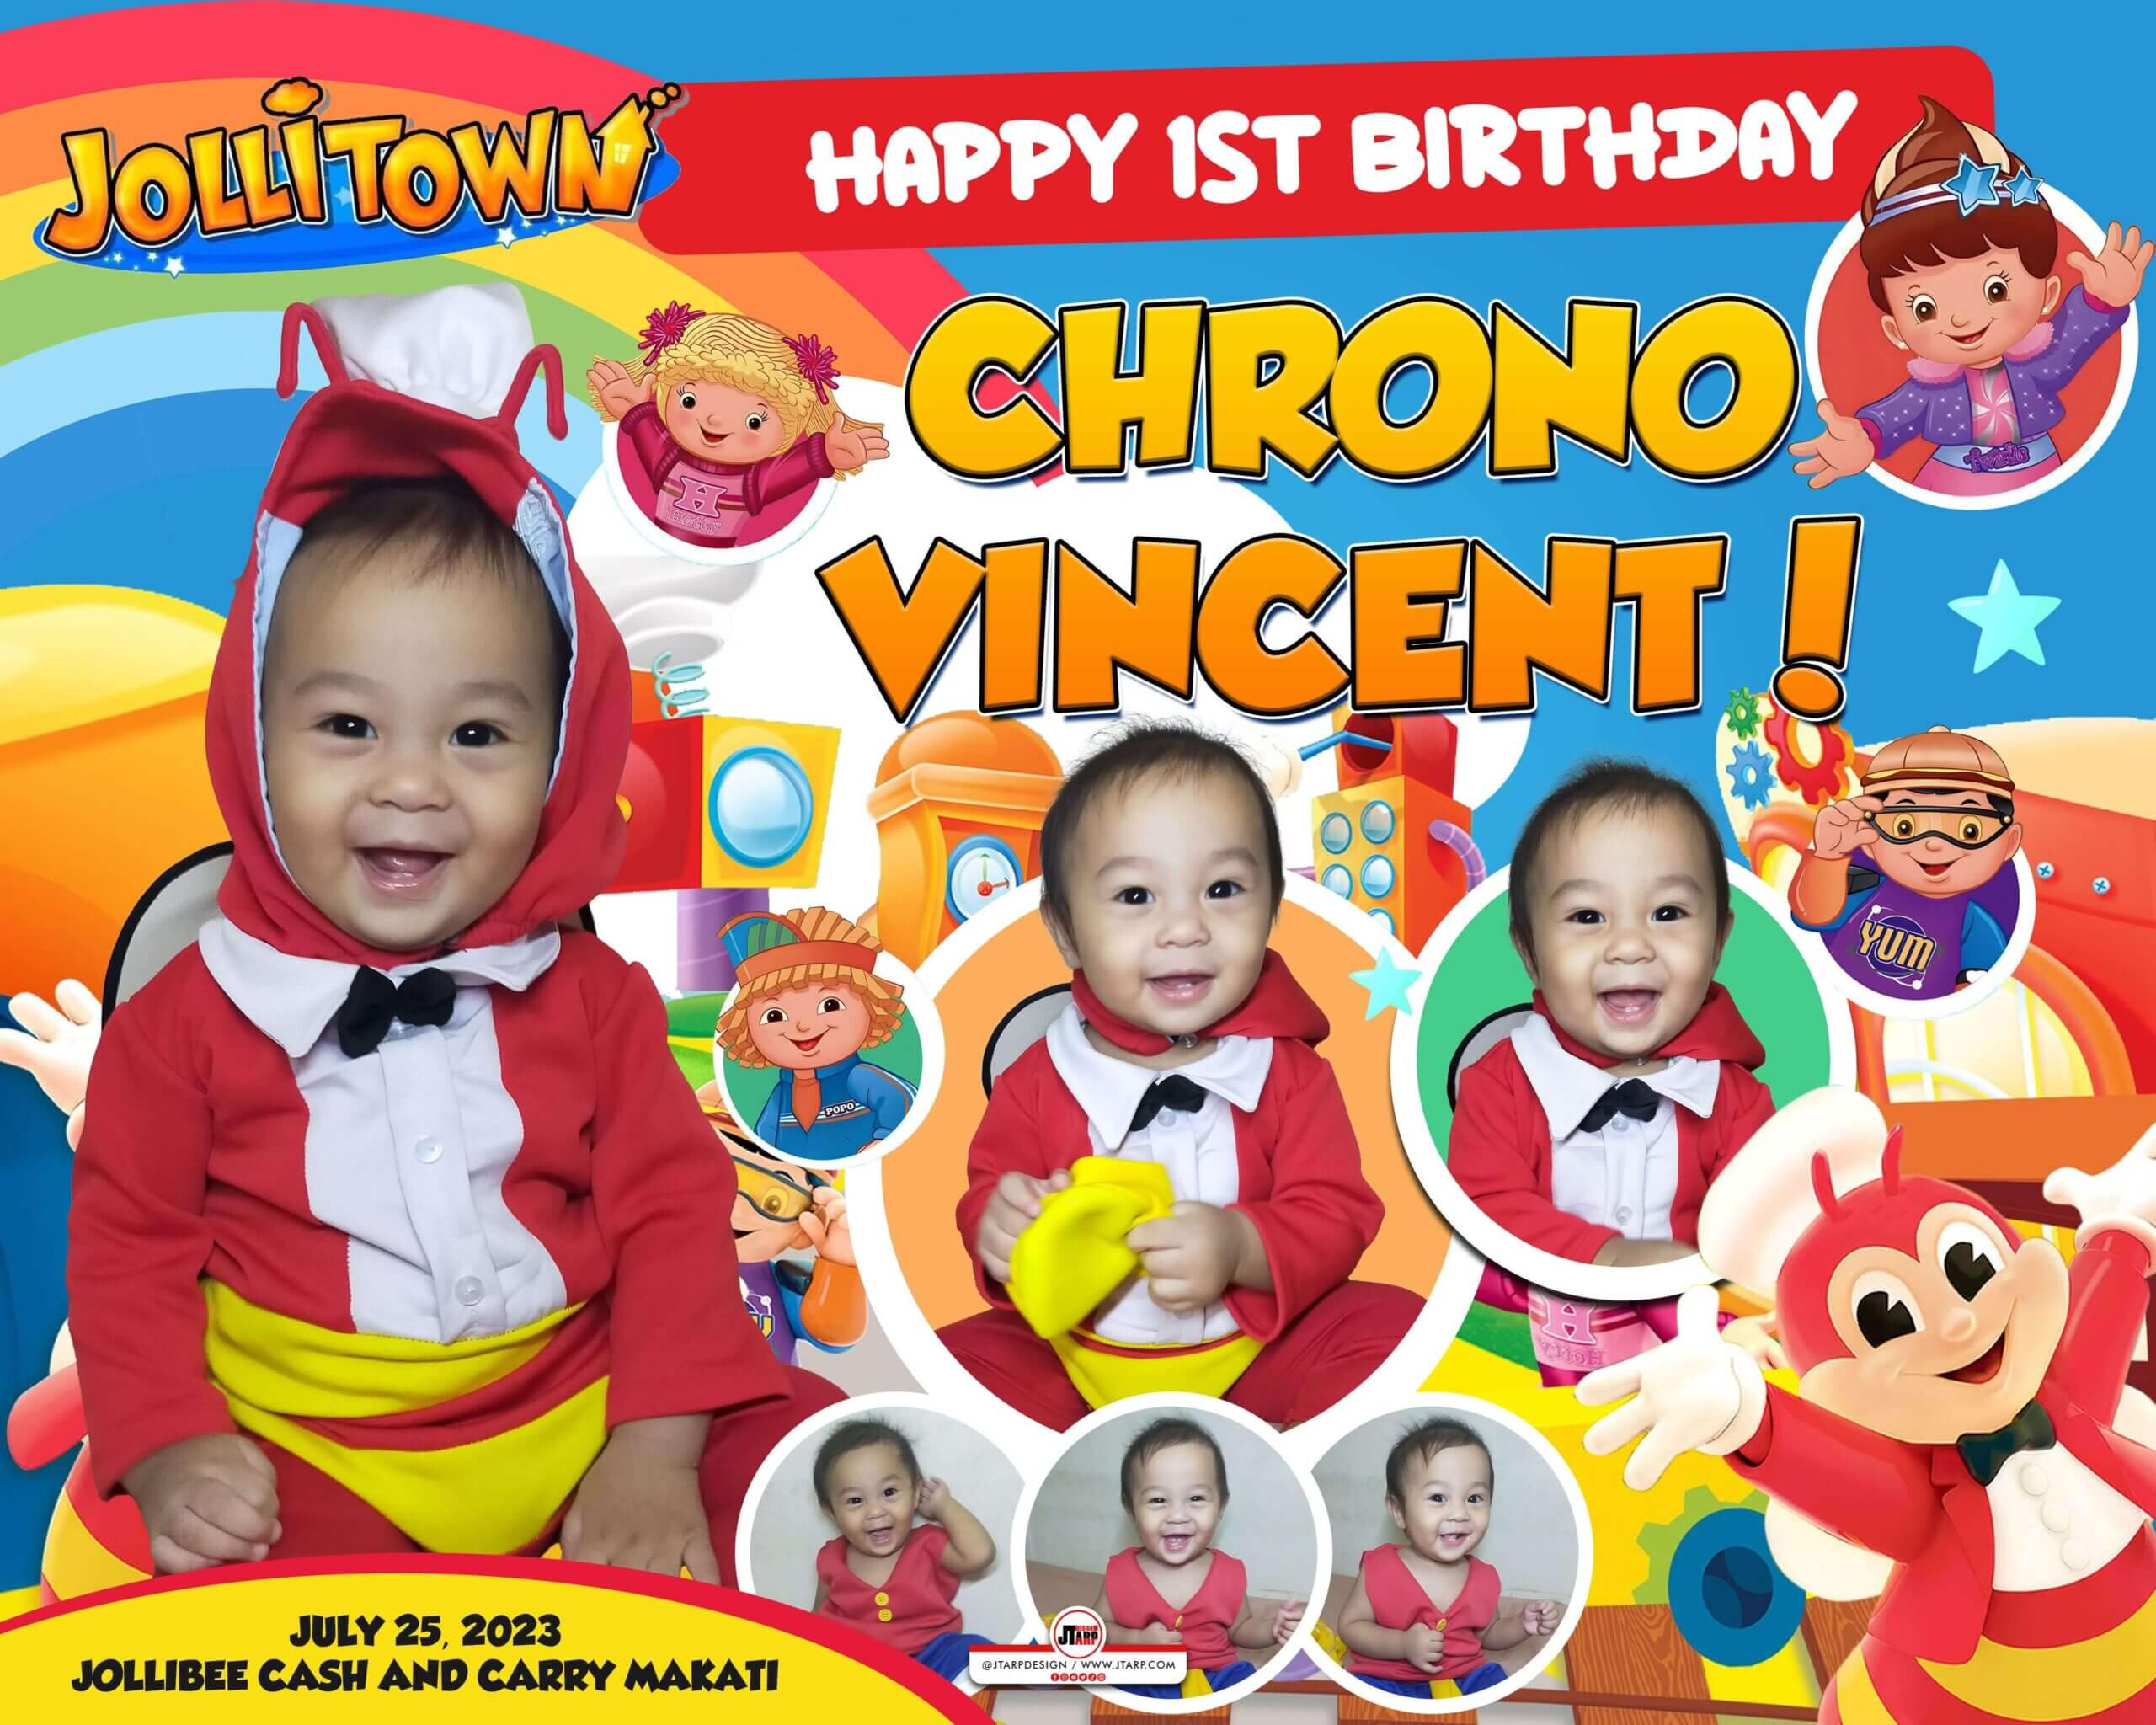 4x5 Happy 1st Birthday Chrono Vincent Jollibee Jollitown Theme Party copy 2